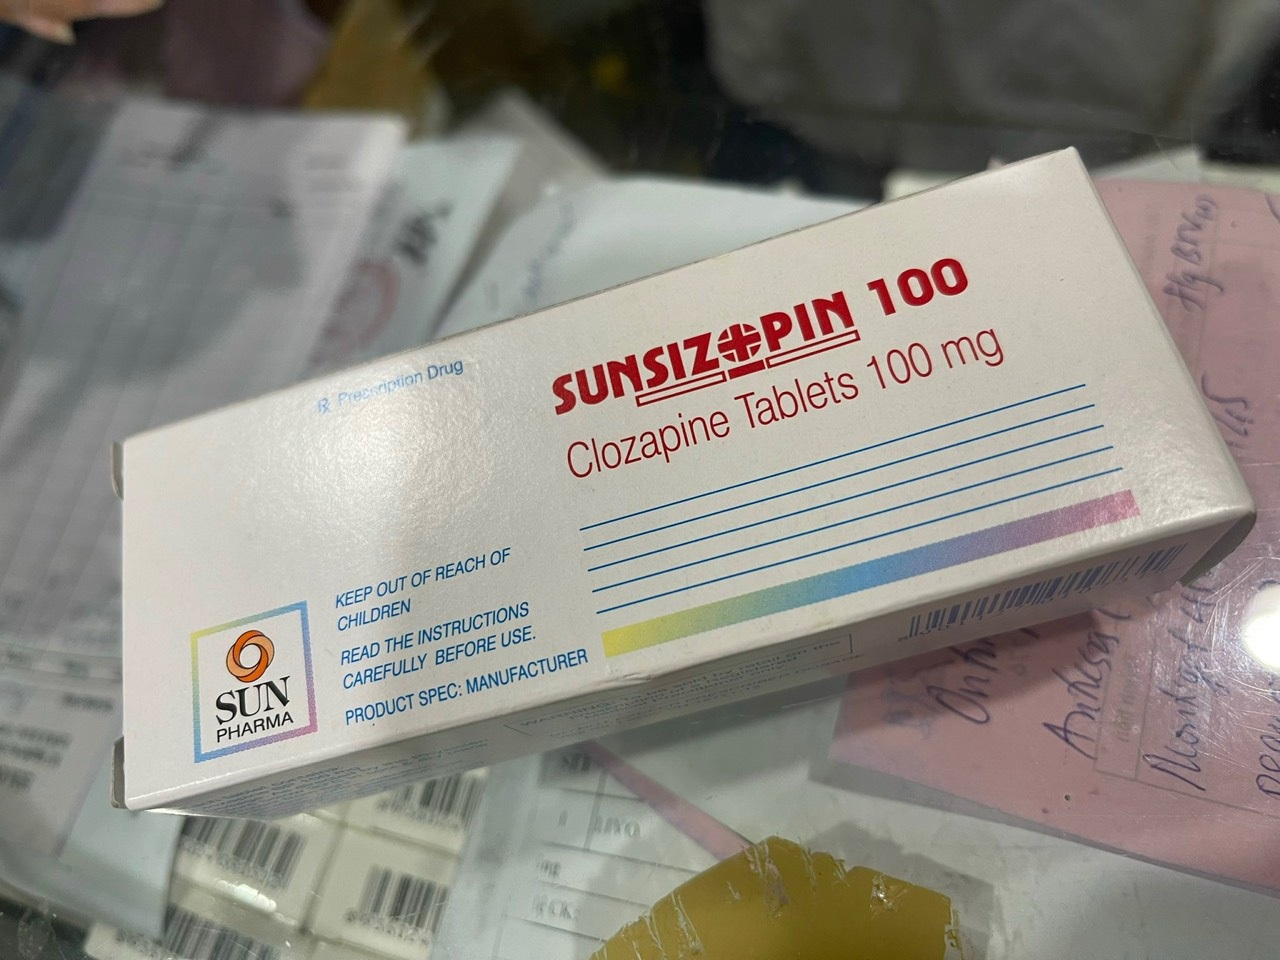 Sunsizopin 100 mg